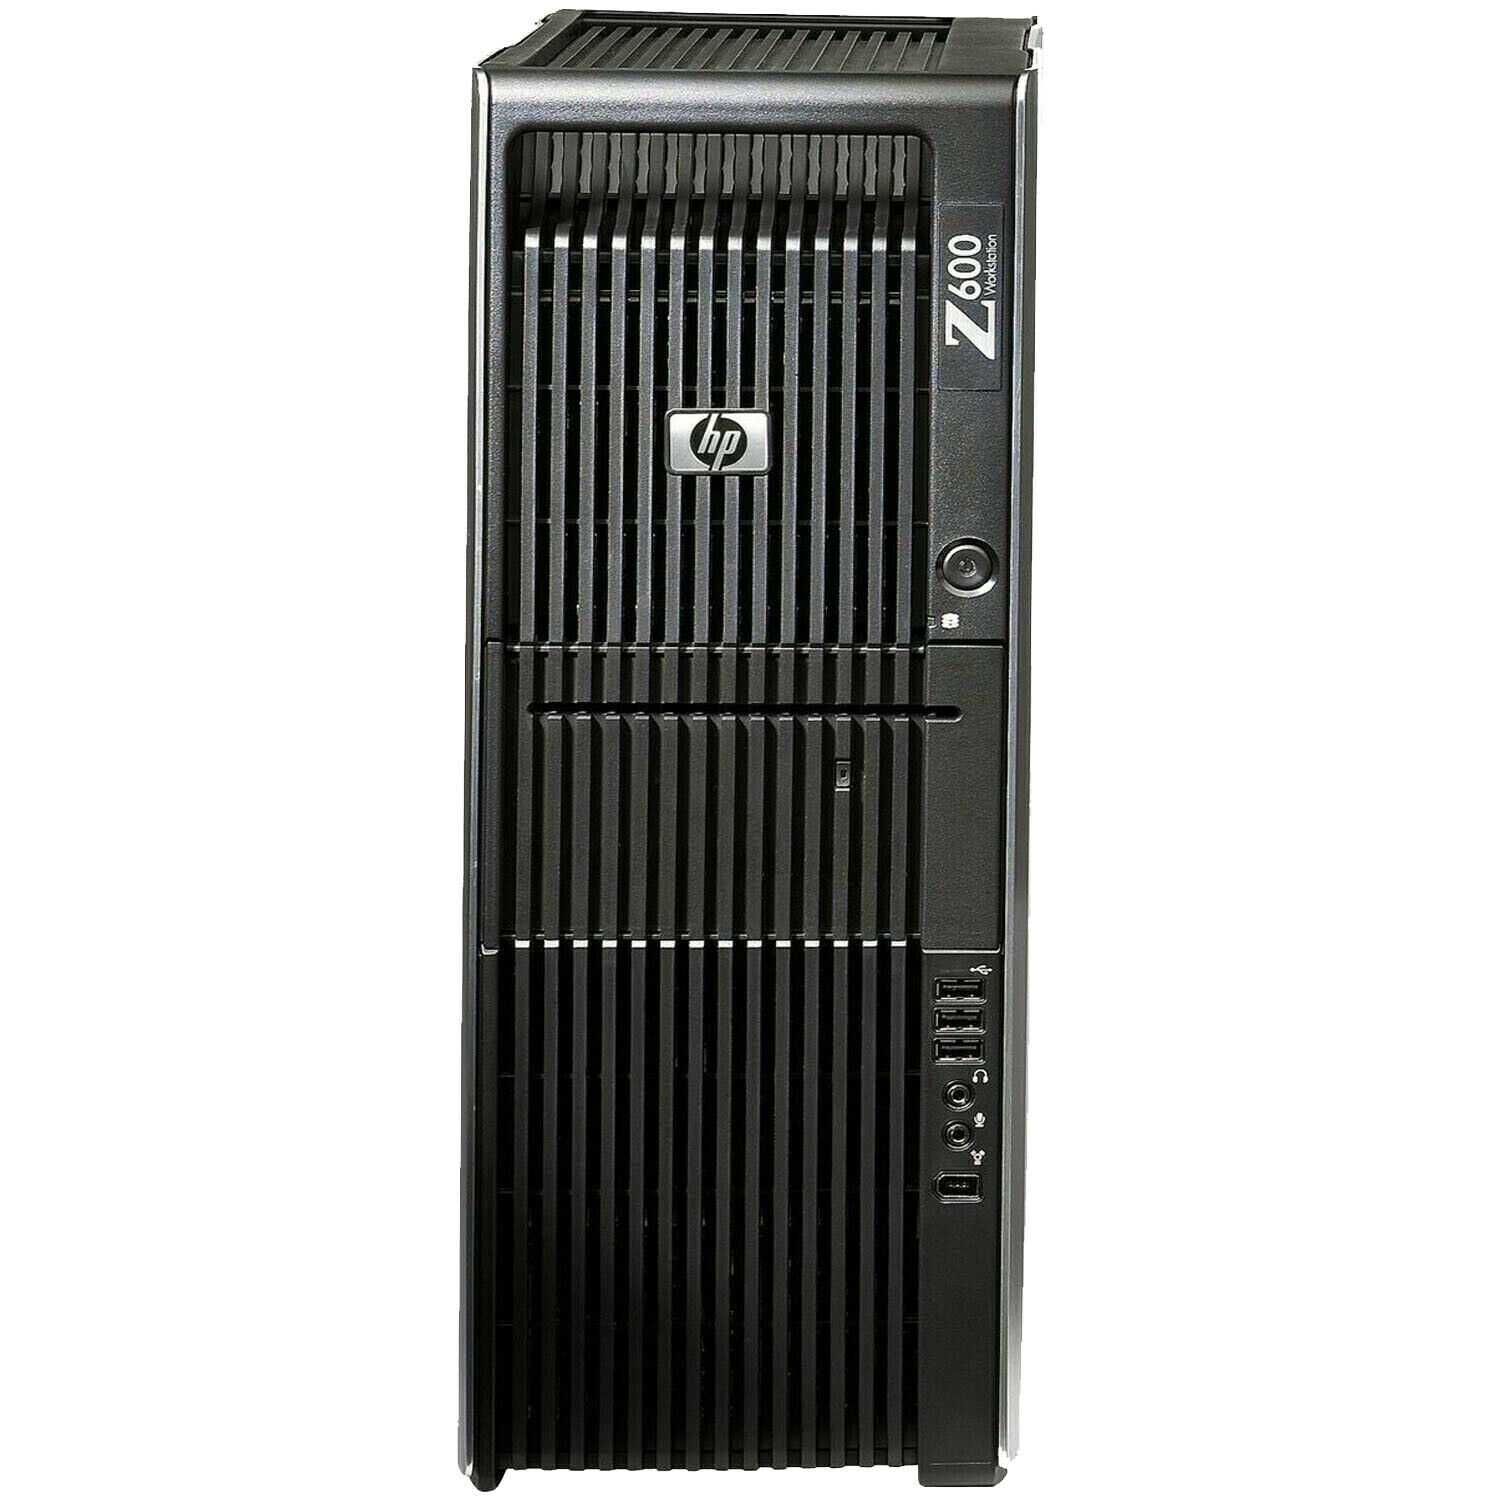 Работна станция HP Z600 X5550 24GB 256GB SSD + 500GB HDD QUADRO